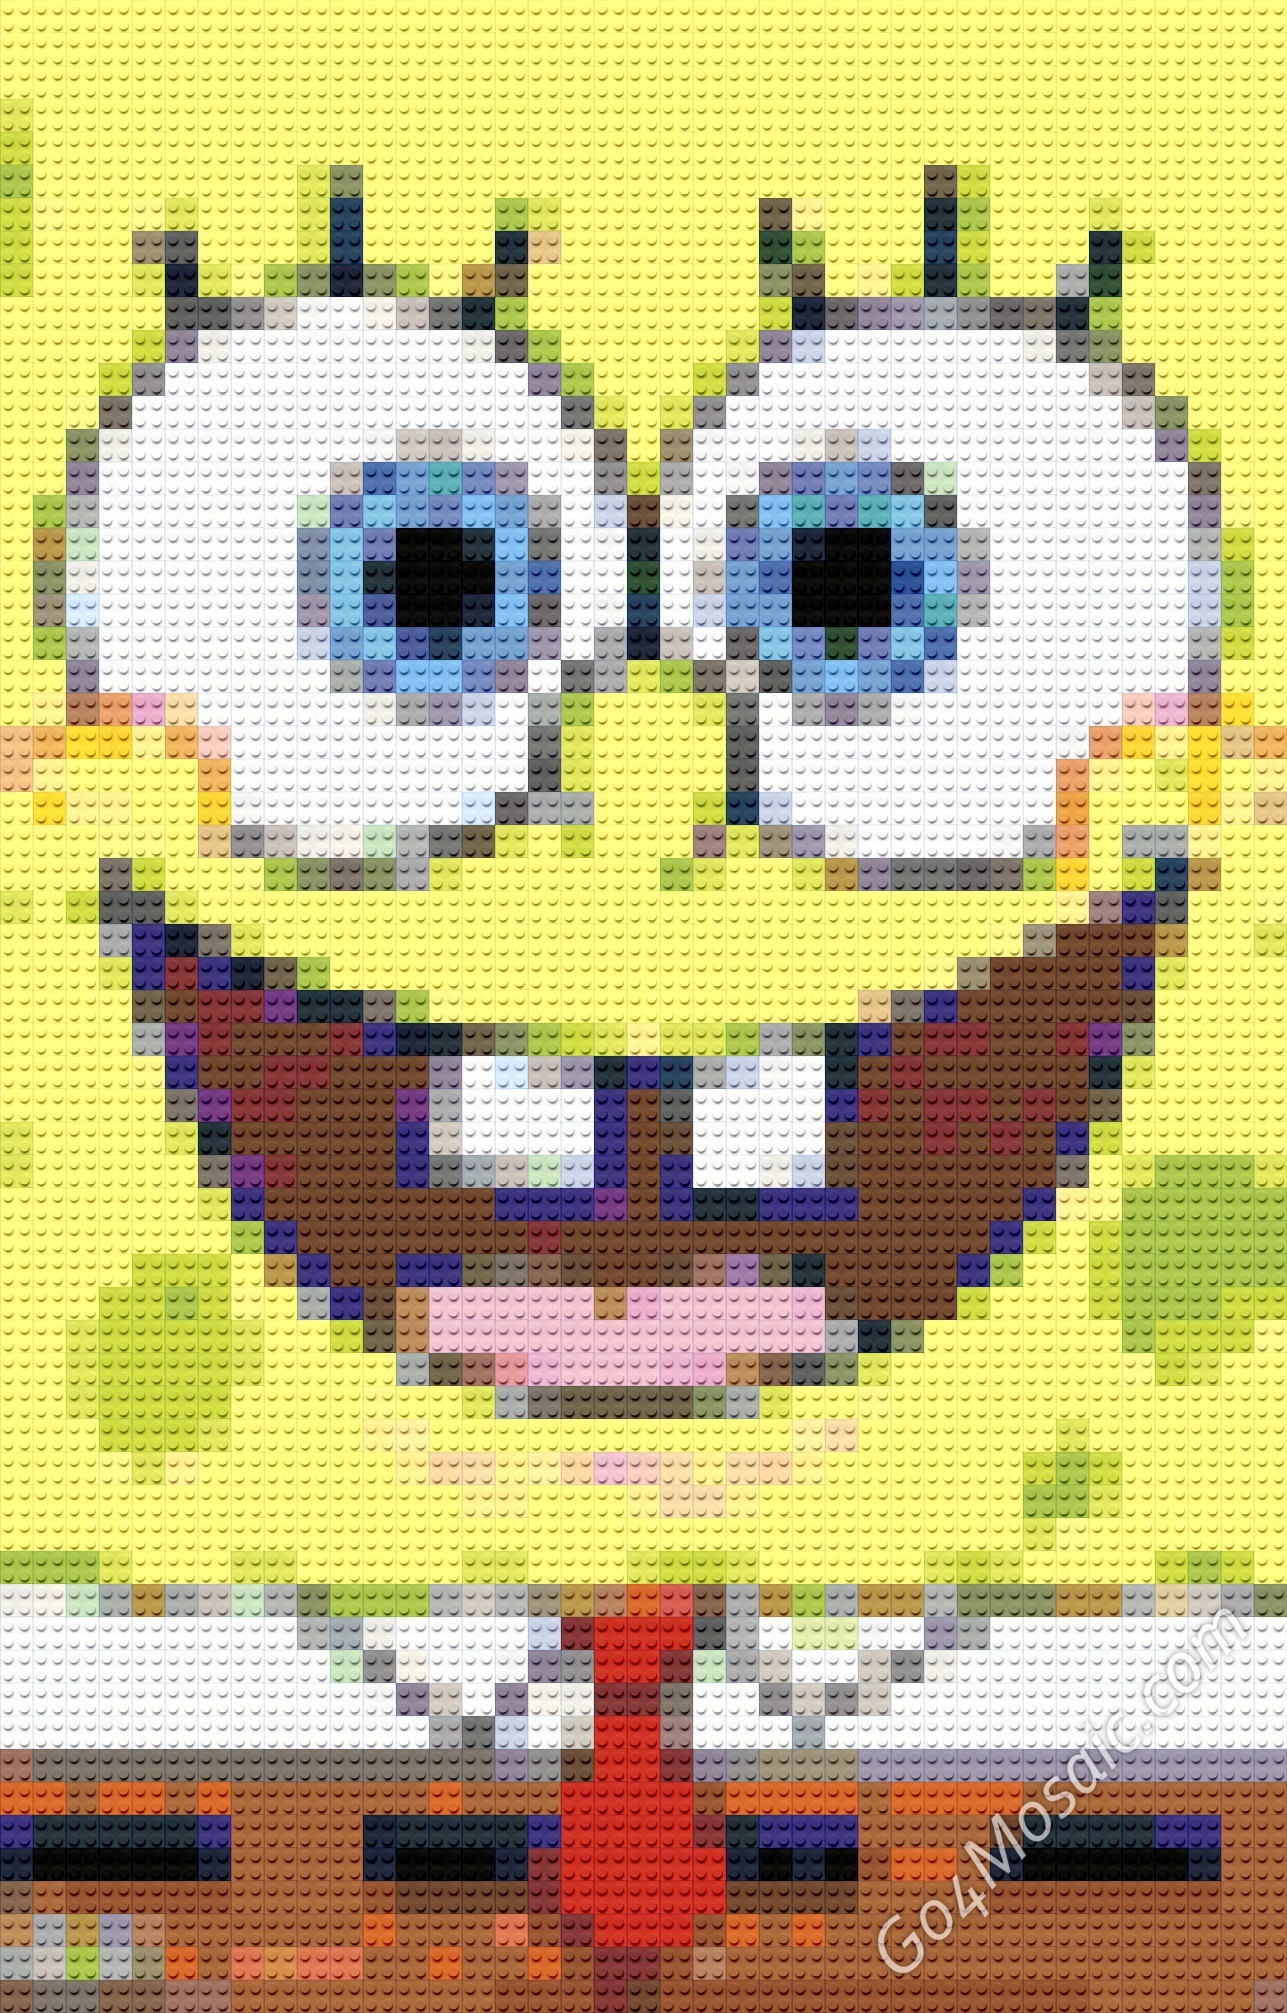 Spongebob Squarepants mosaic from Lego Bricks